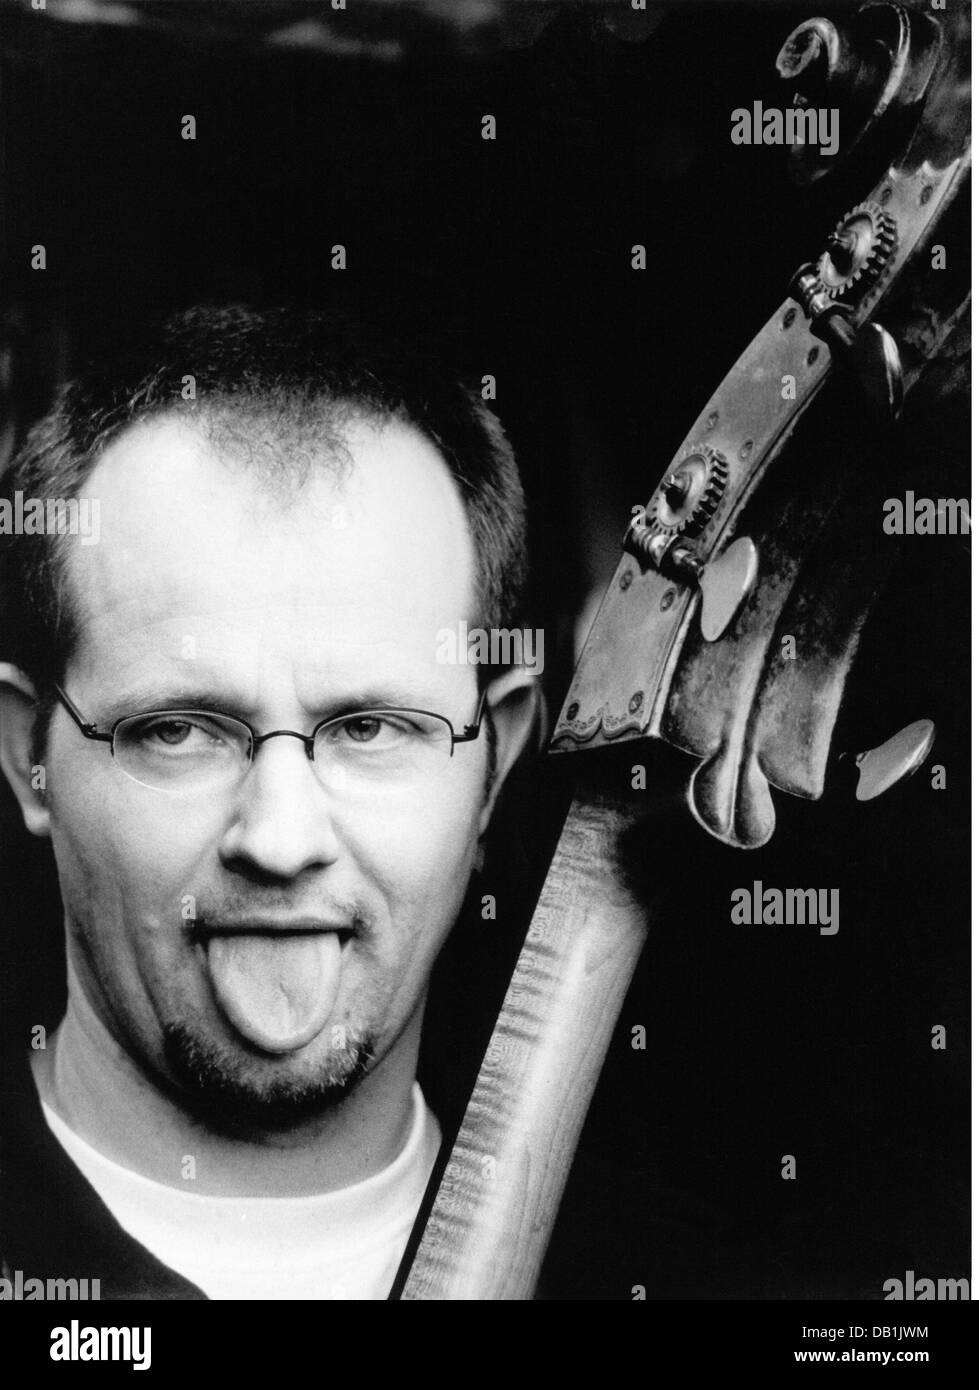 Ilg, Dieter, * 30.9.1961, German musician (jazz), double bass player, portrait, Mannheim, 2001, Stock Photo